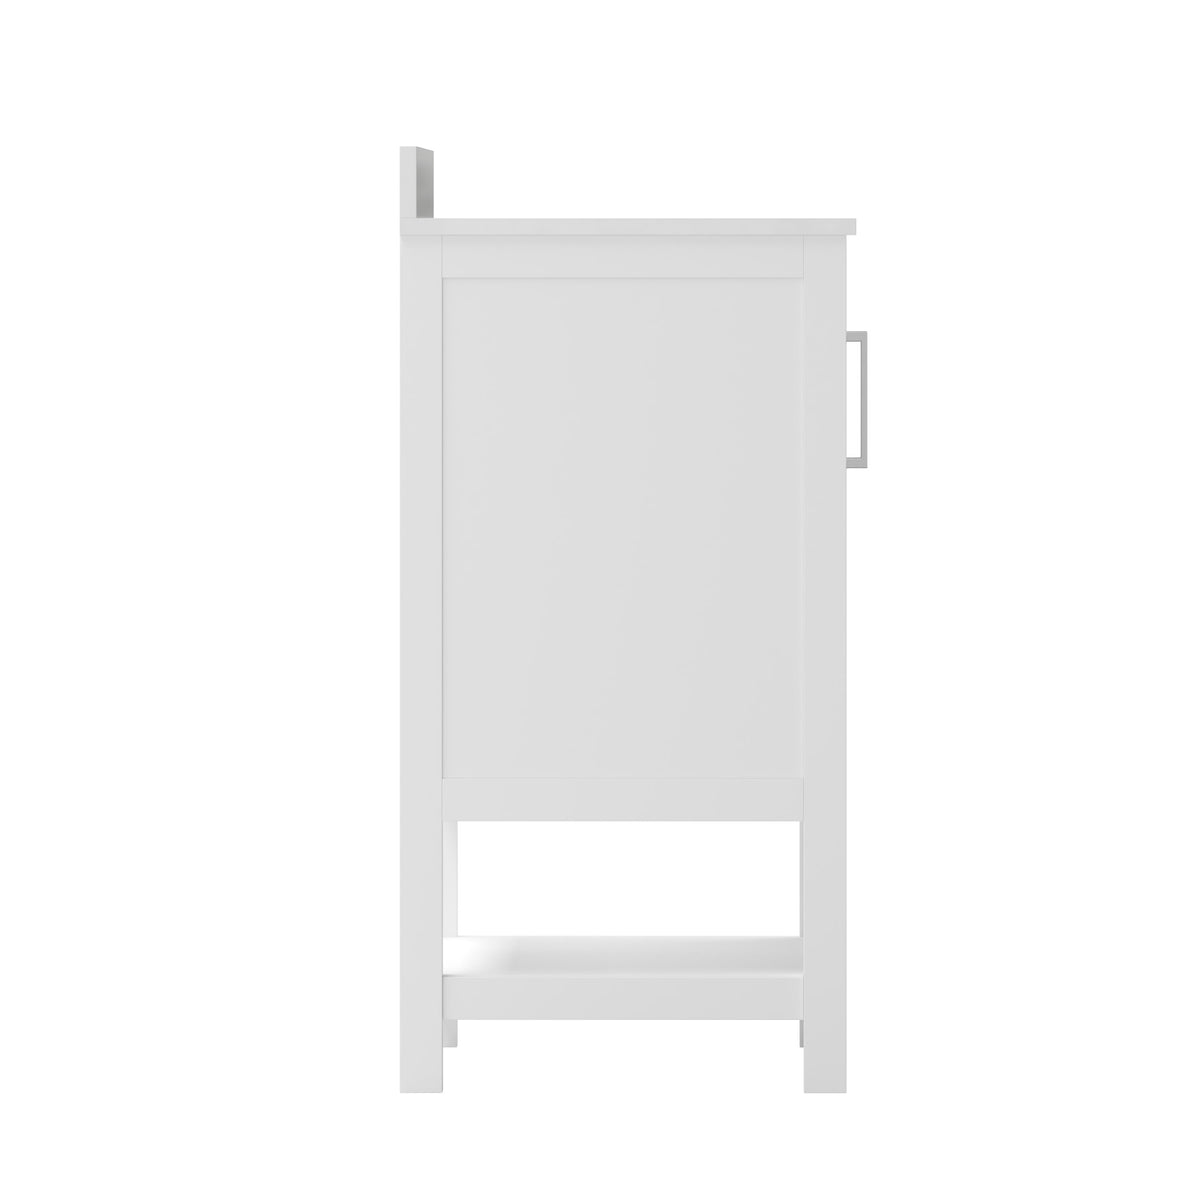 White,36inch |#| 36 Inch Bathroom Vanity with Undermount Sink and Open Storage Shelf in White